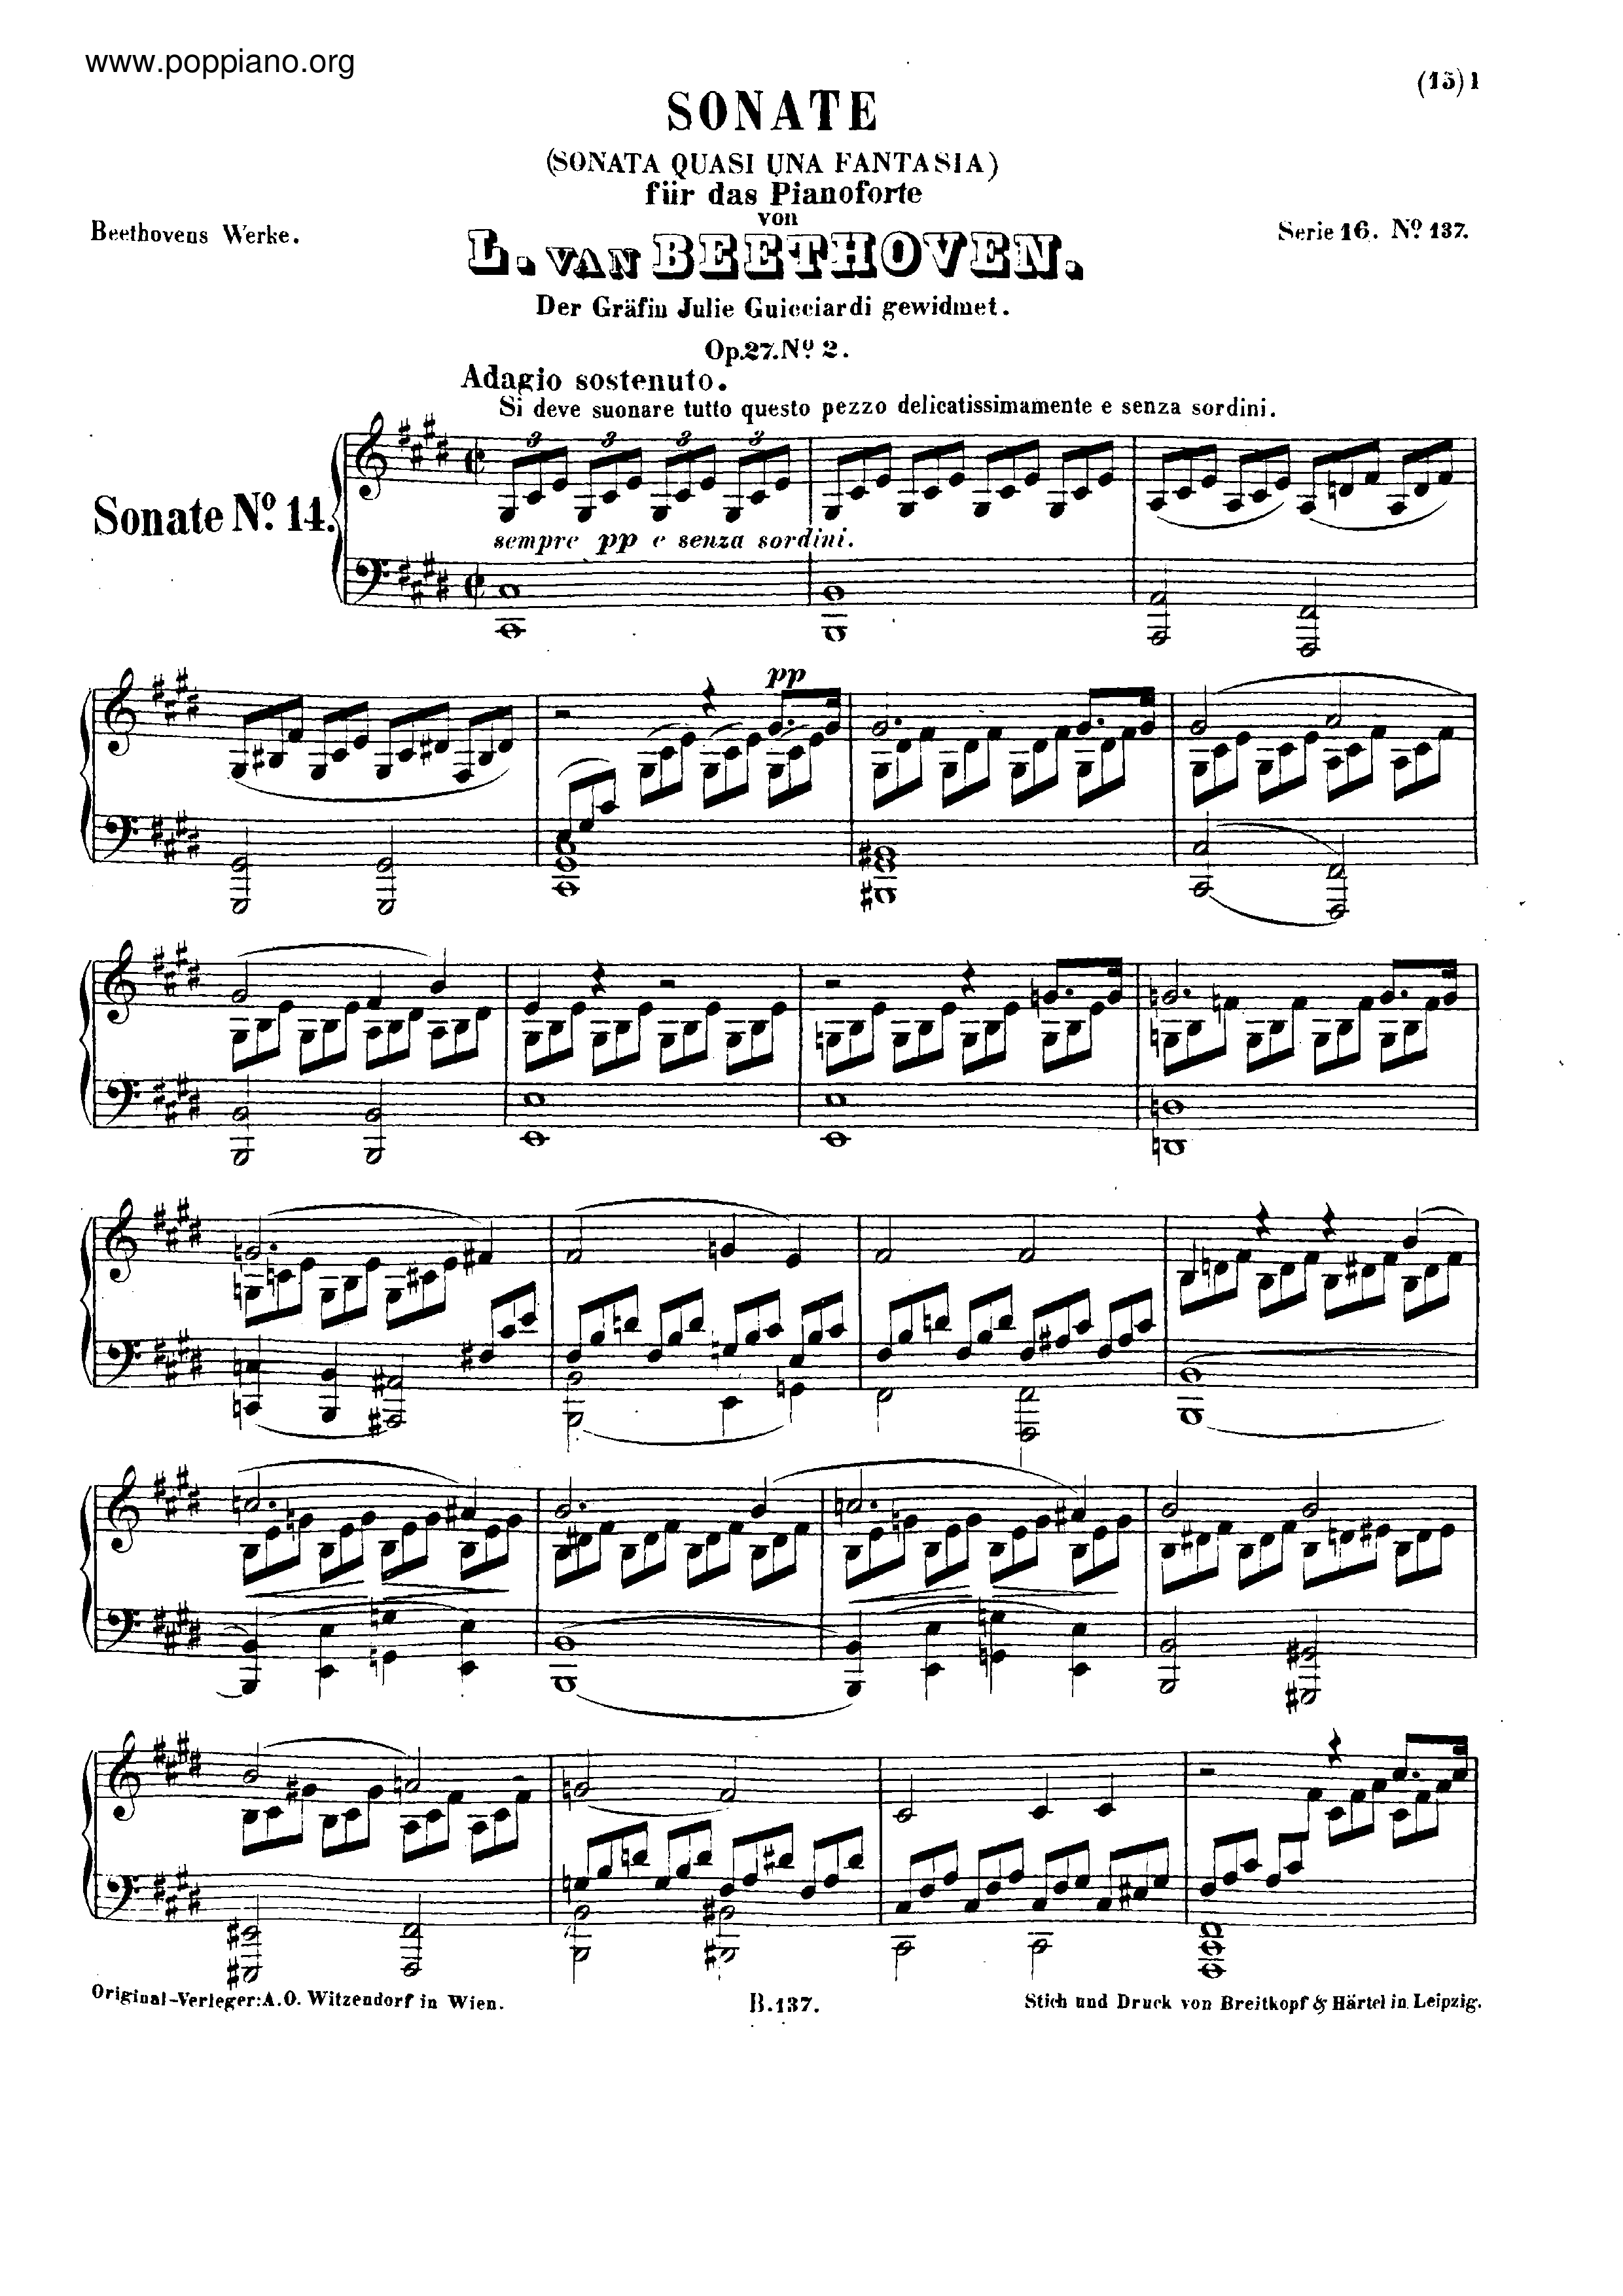 Sonata No. 14 Moonlight in C-Sharp Minor, Op. 27 No. 2: I. Adagio sostenuto琴譜